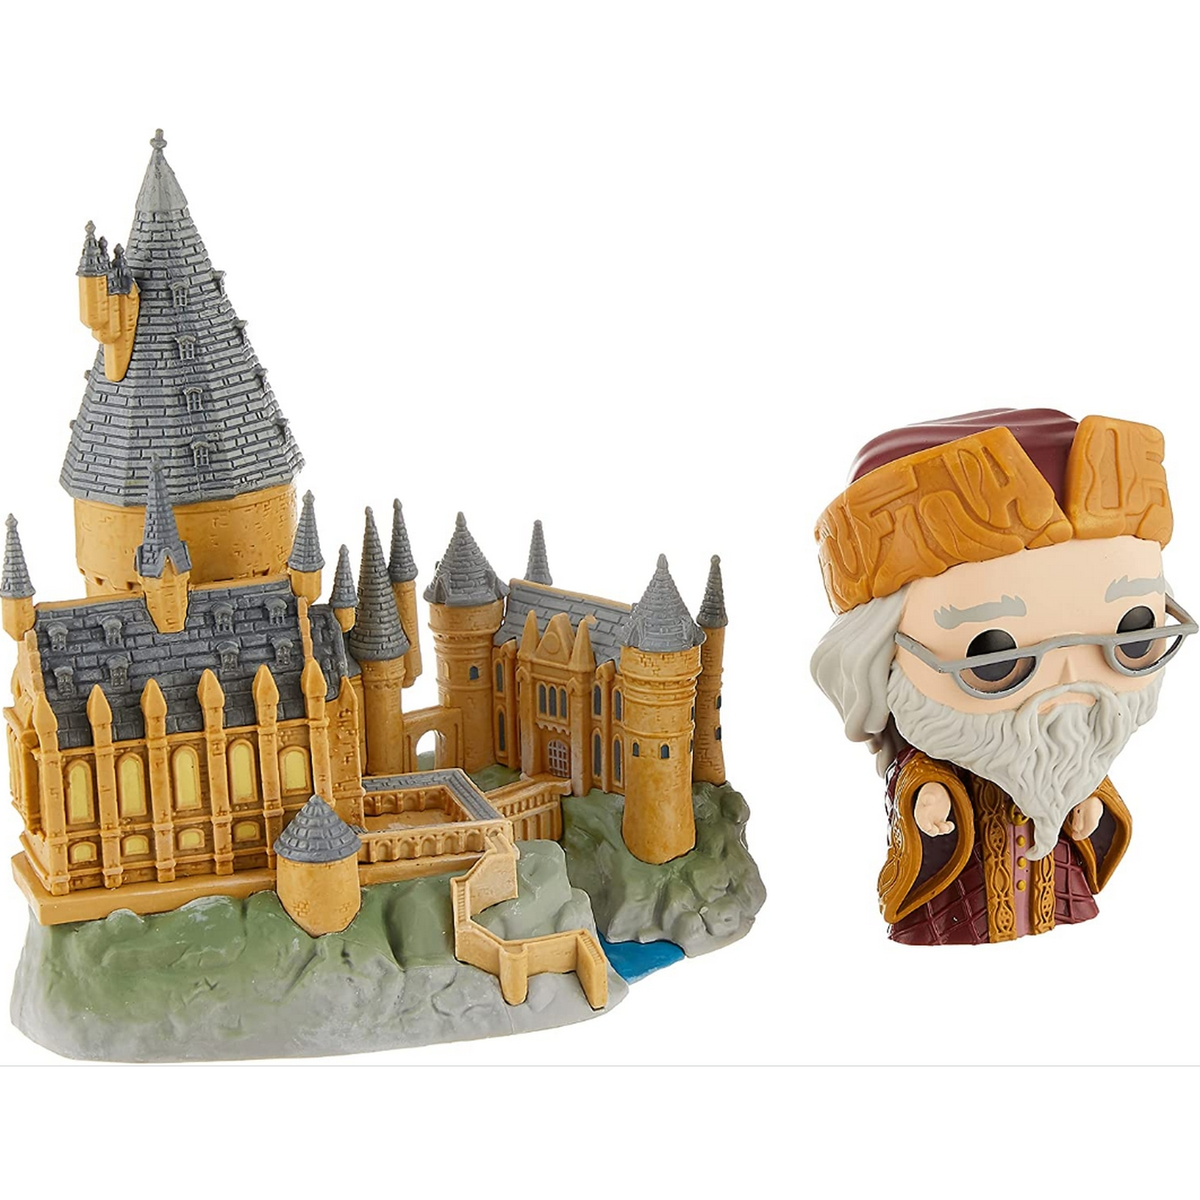 POP - Harry Potter - with Hogwarts Dumbledore